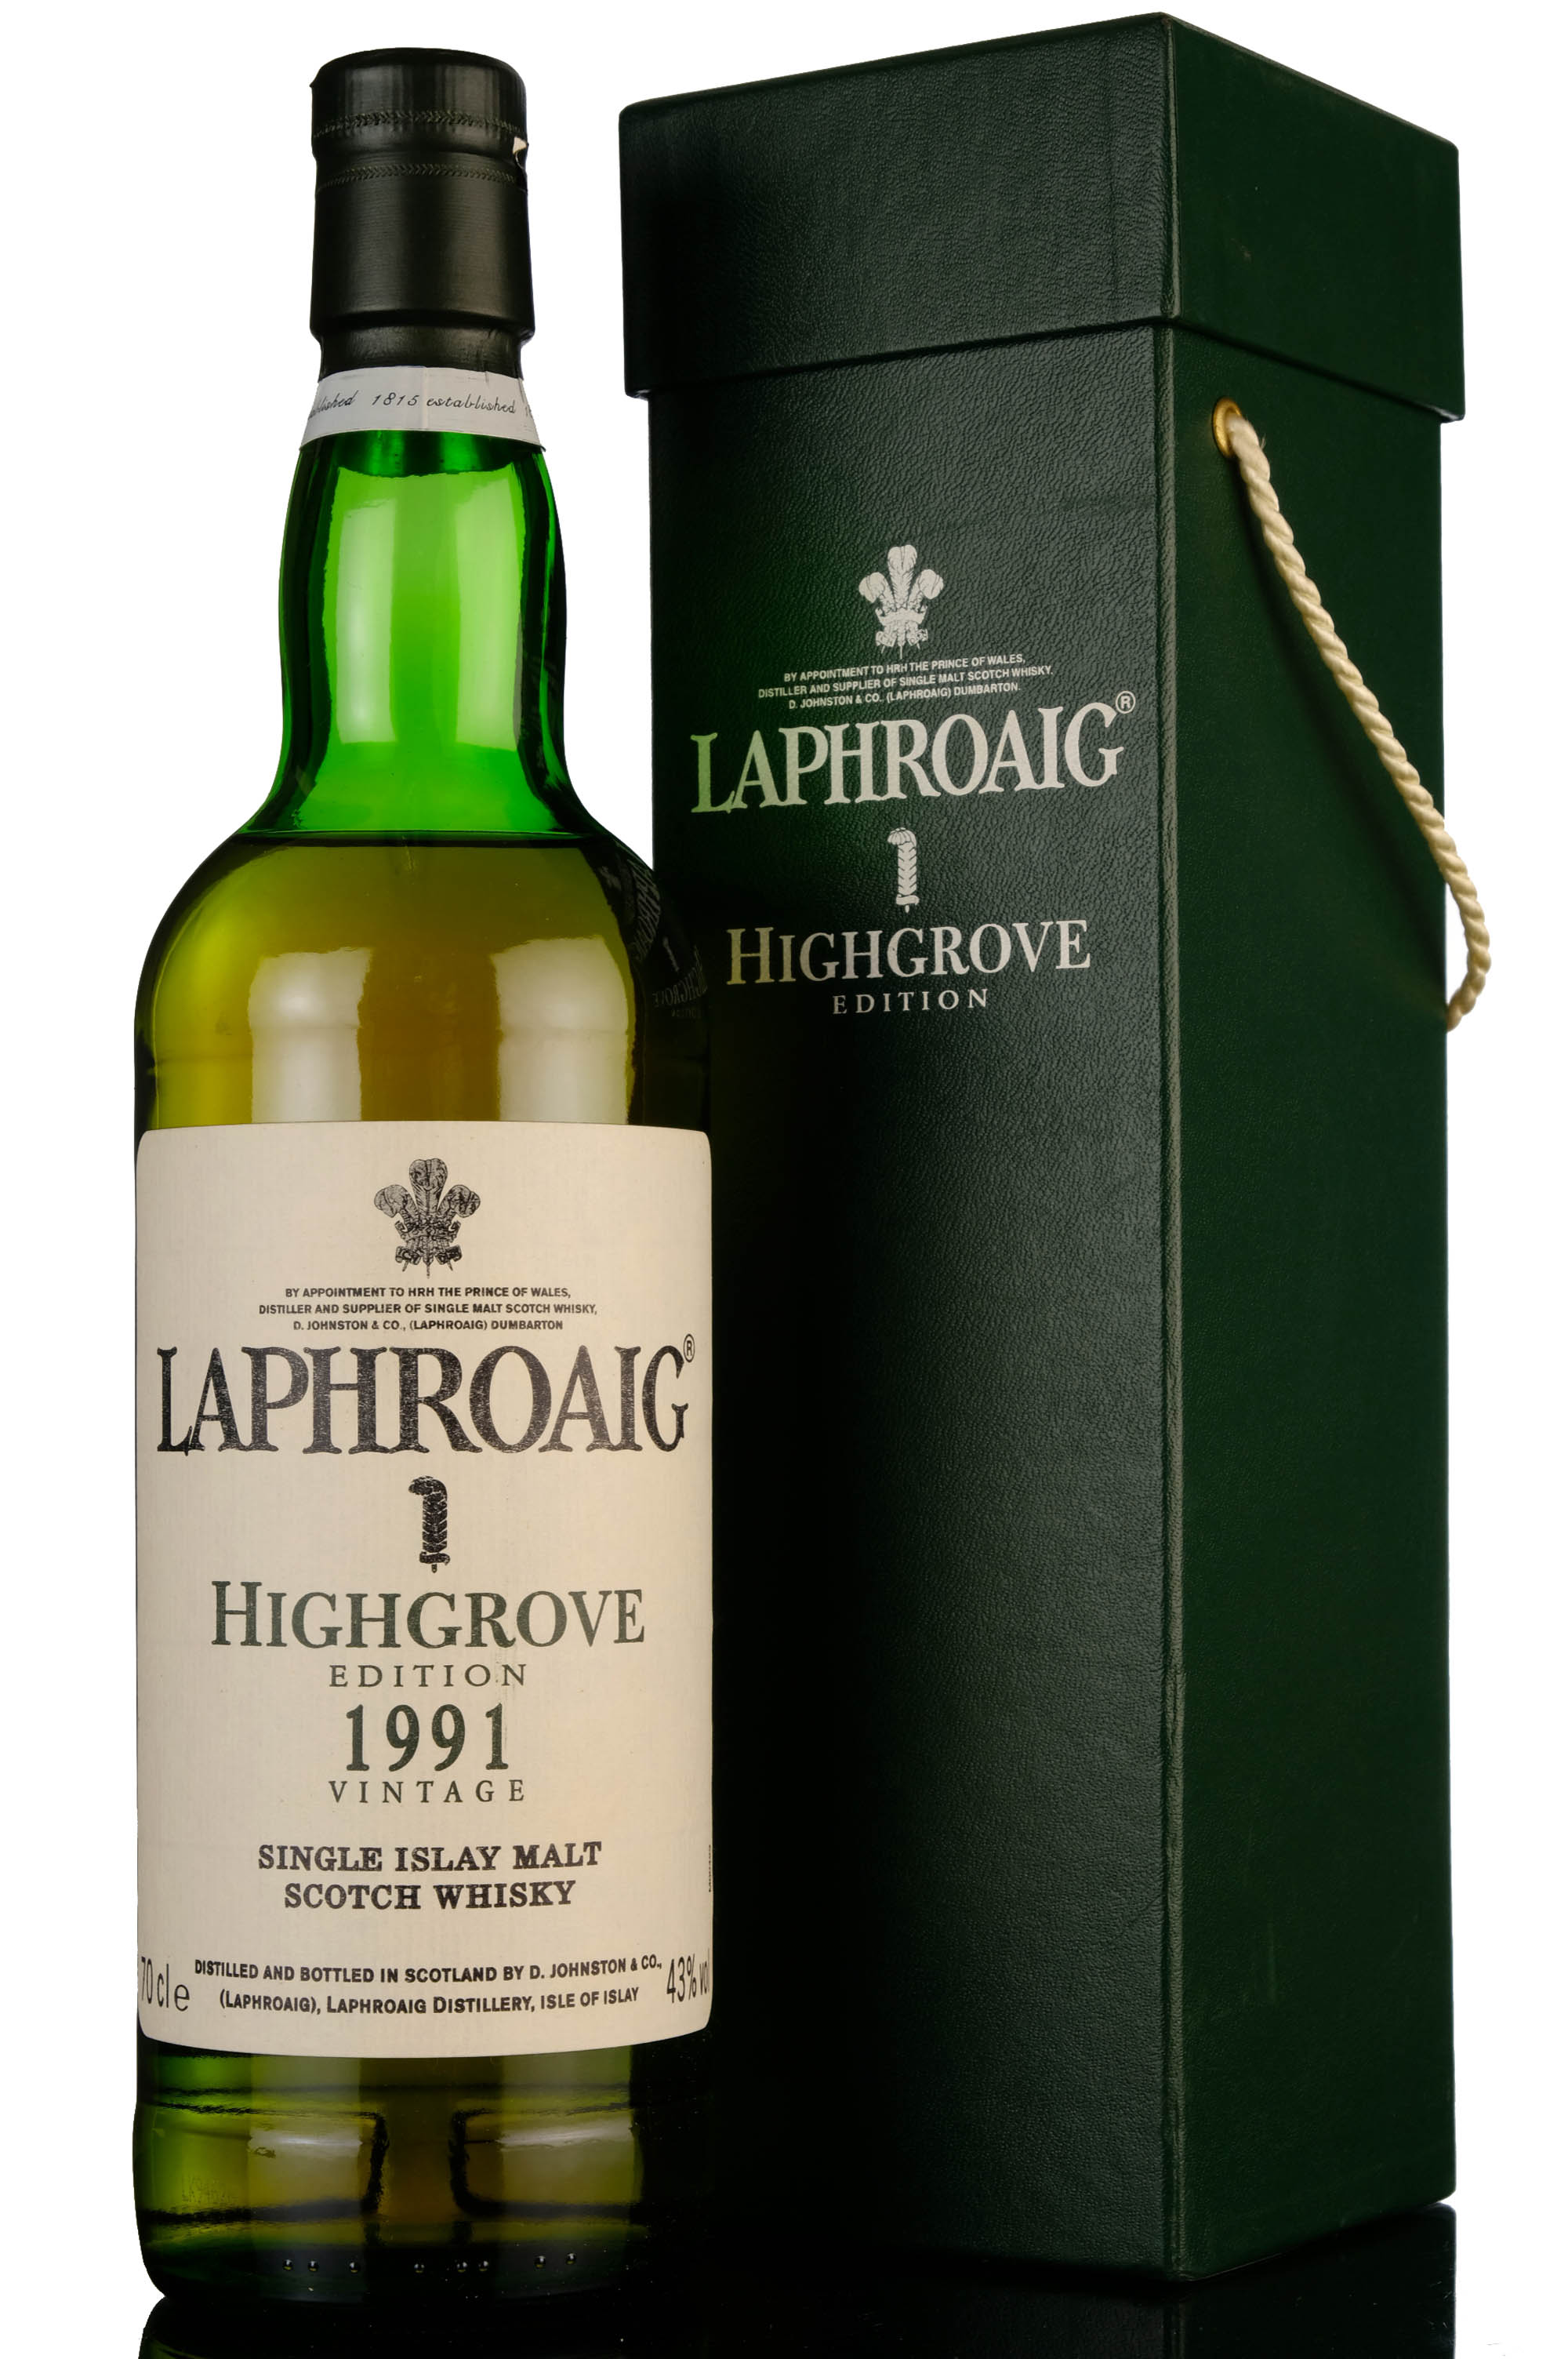 Laphroaig 1991 - Highgrove Edition - 2001 Release